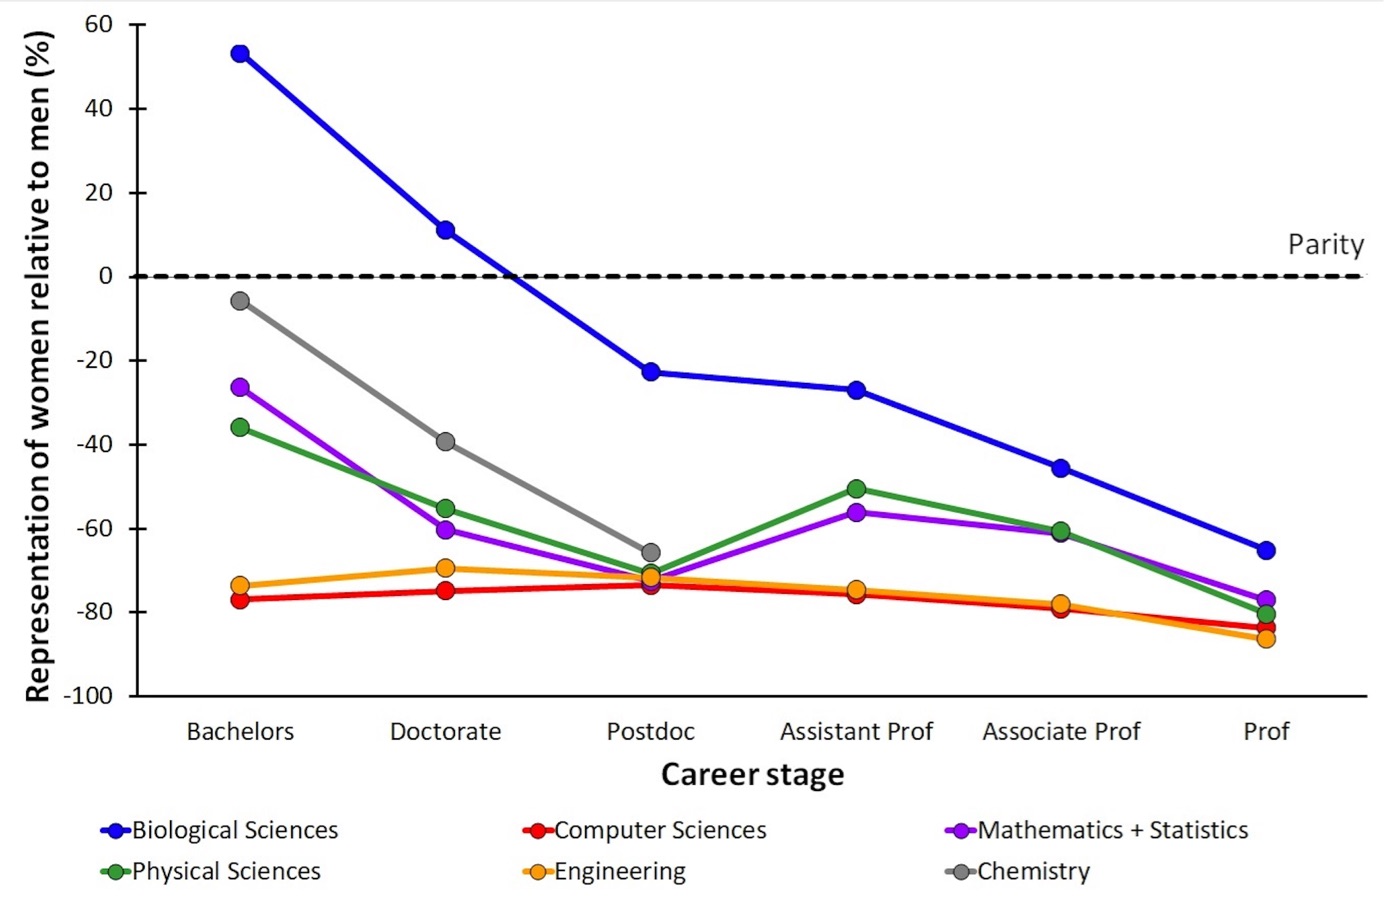 Representation Disparity of Women at Different Career Stages across STEM Disciplines